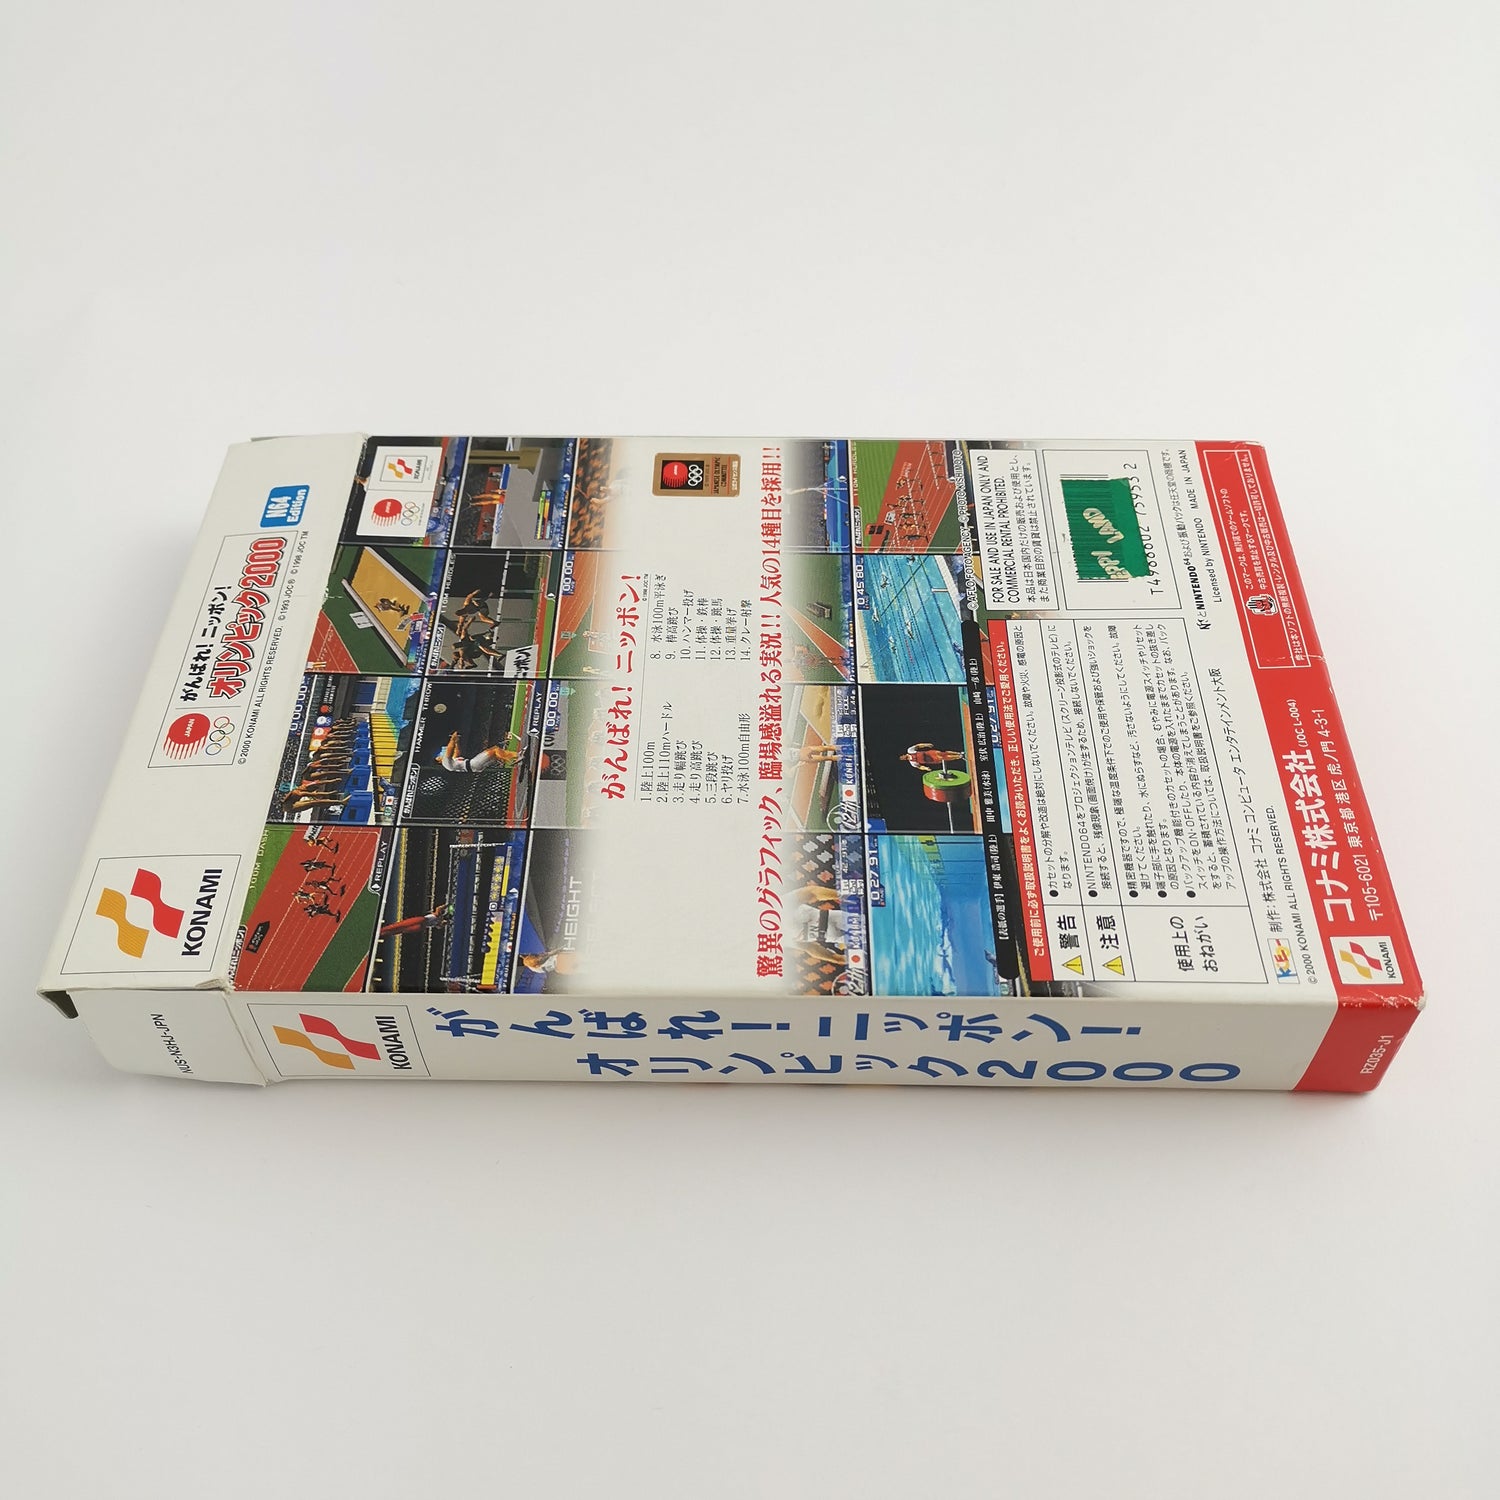 Nintendo 64 Game 